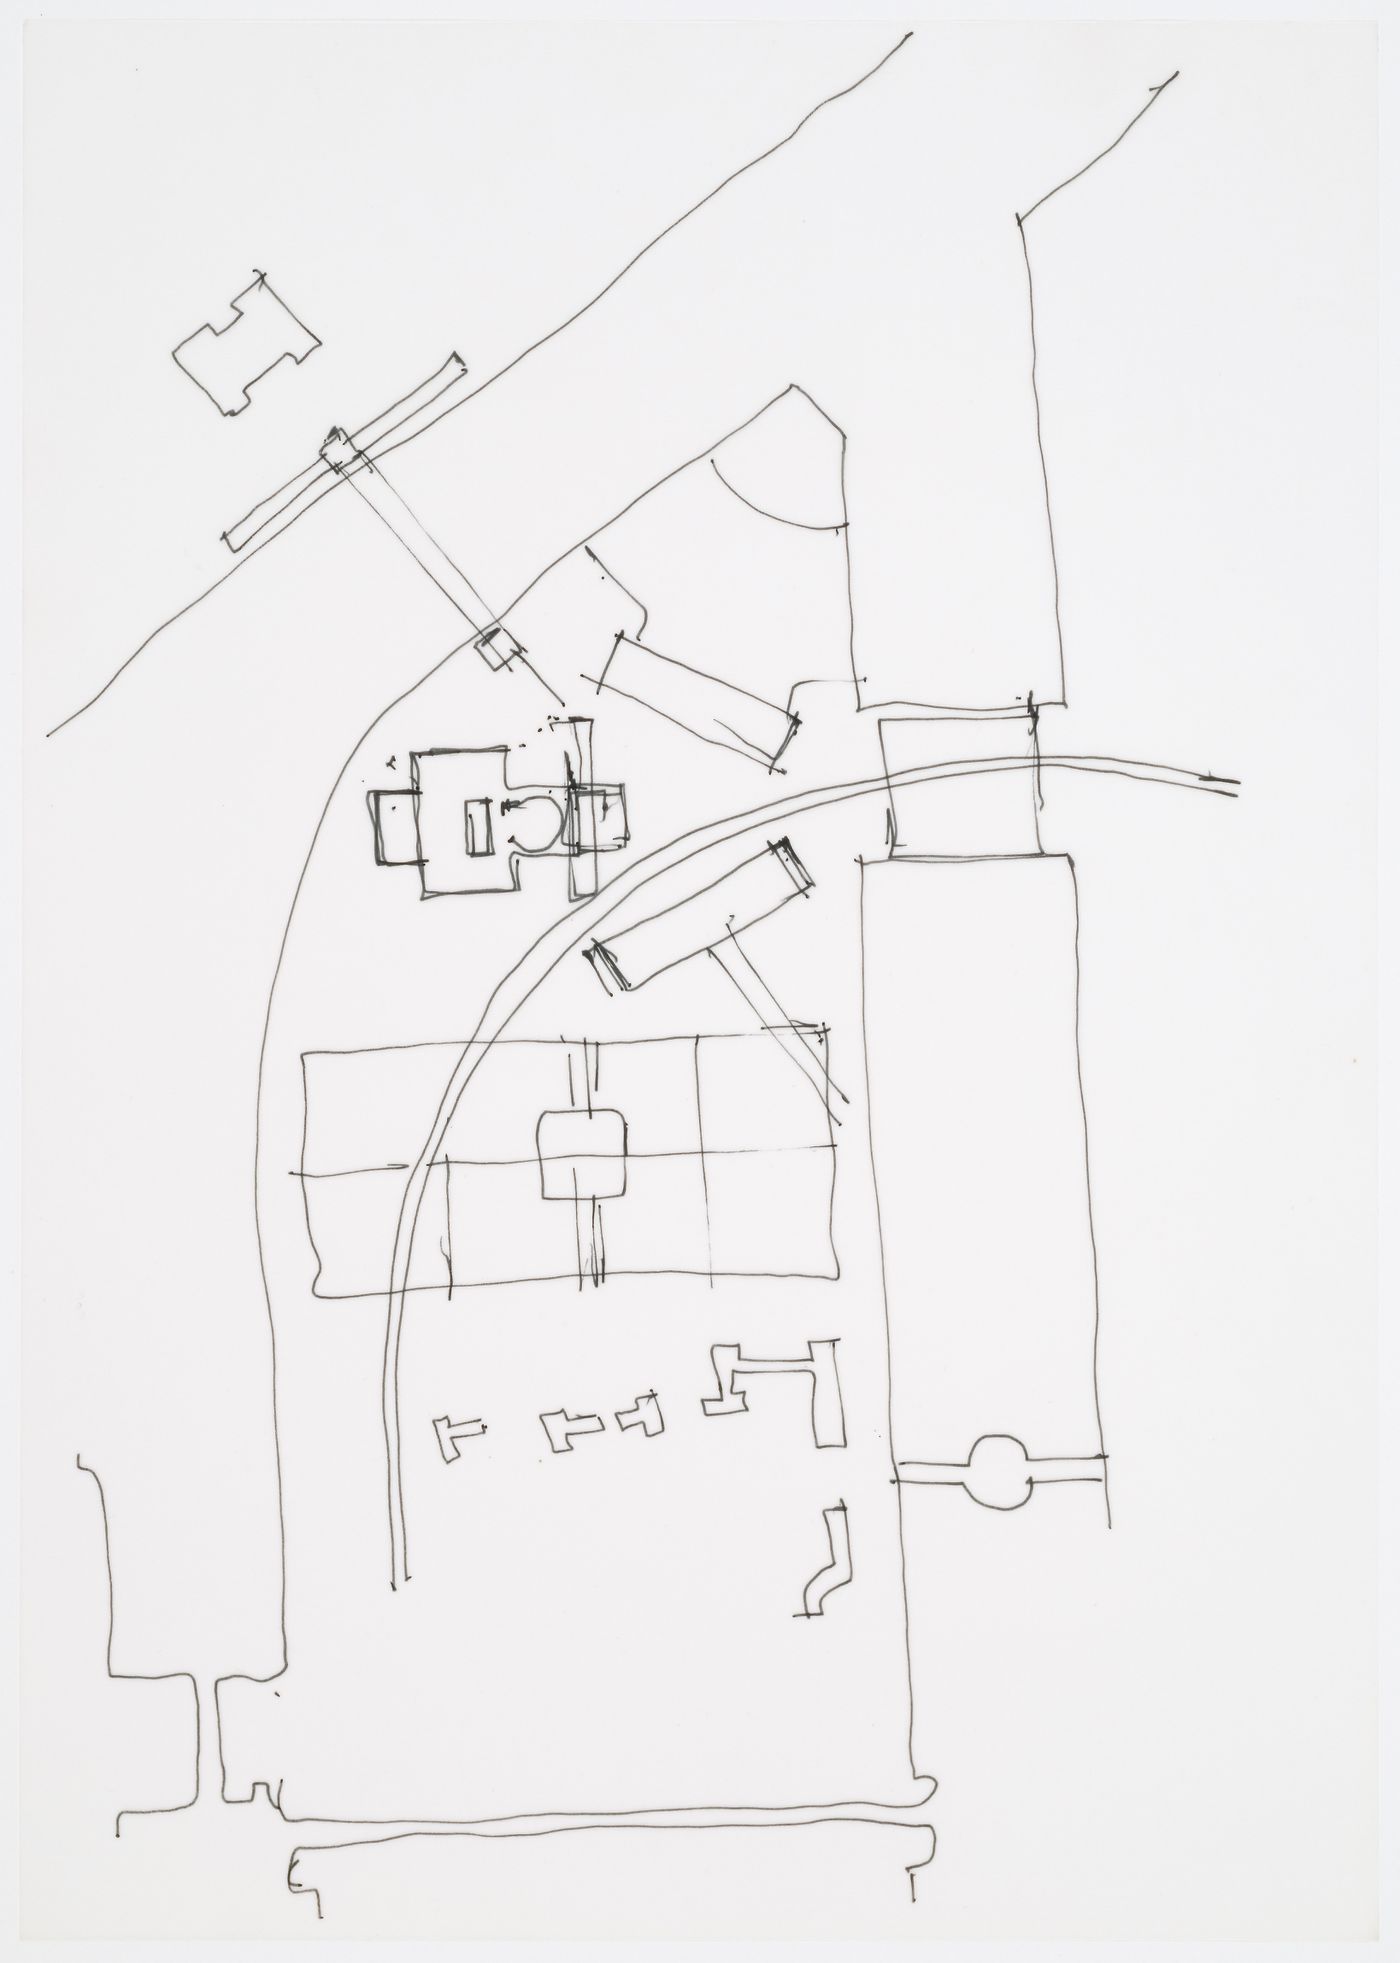 Lowry Centre, Salford, England: Site plan